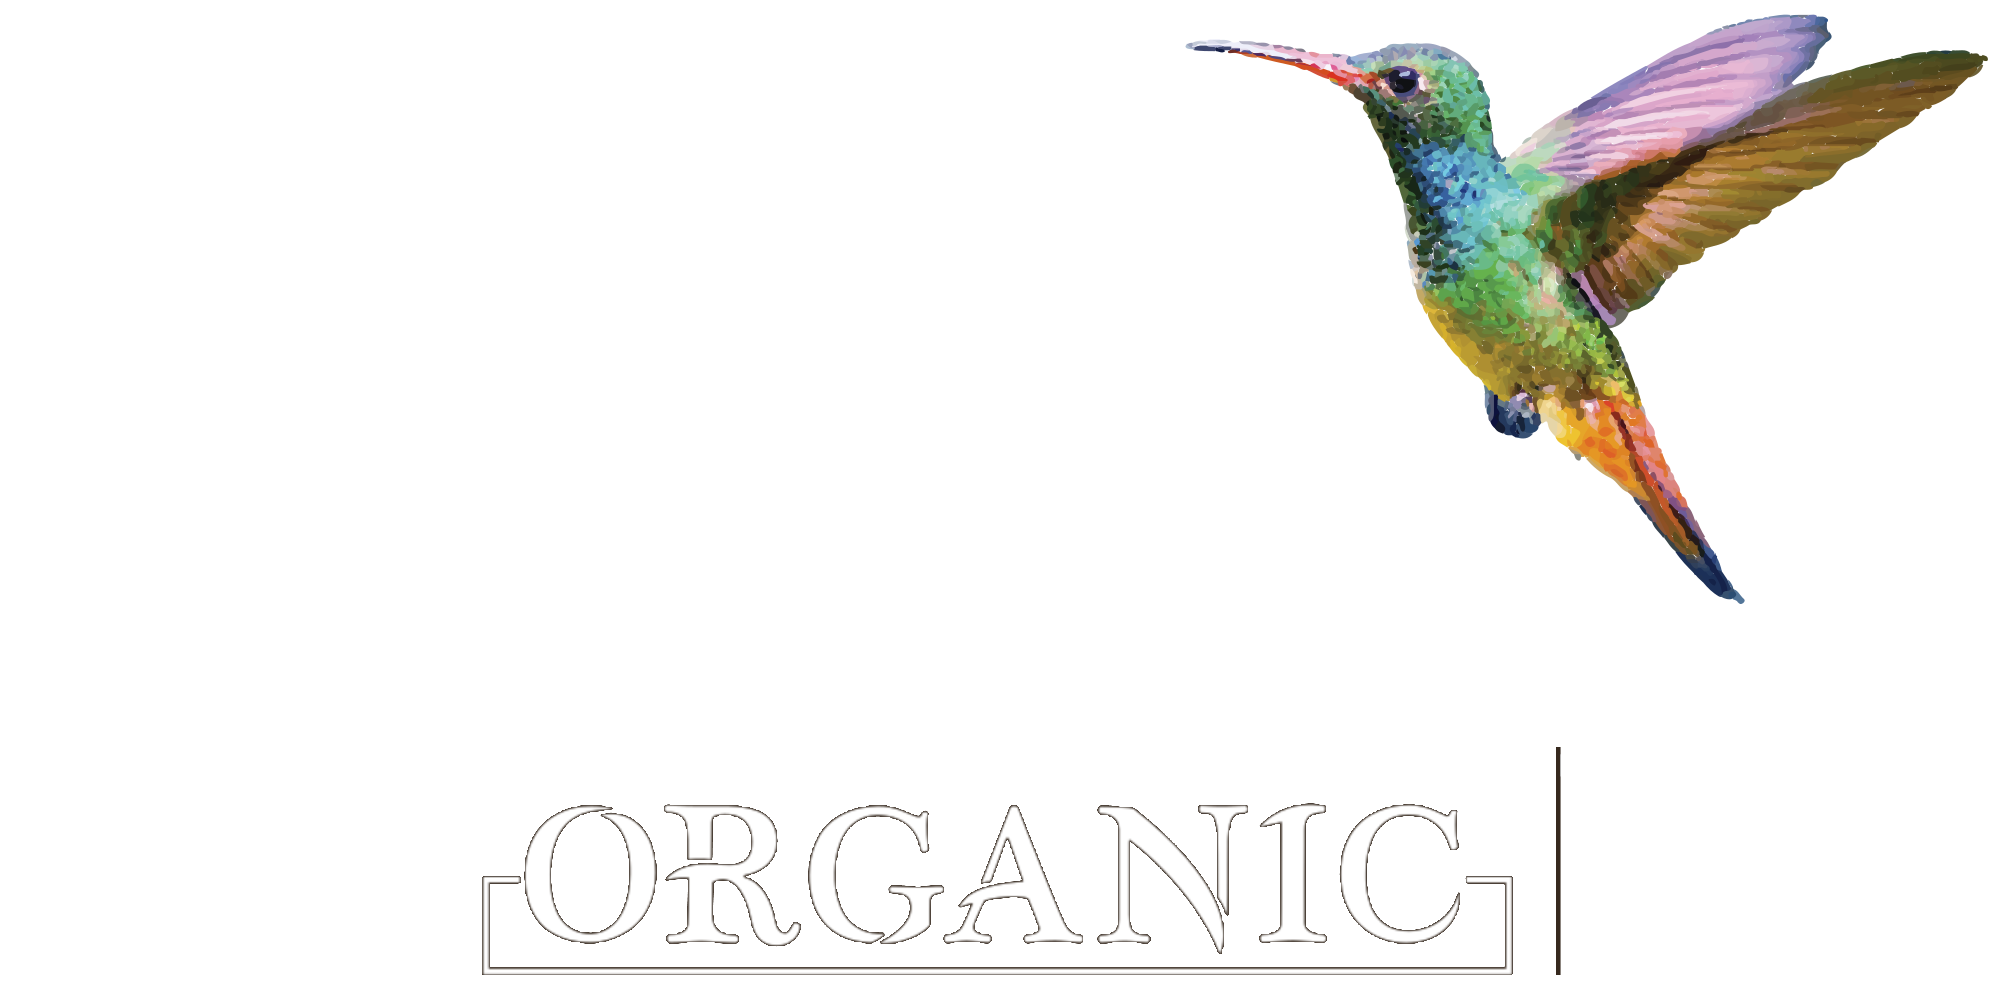 Terra Vida 3M Organic